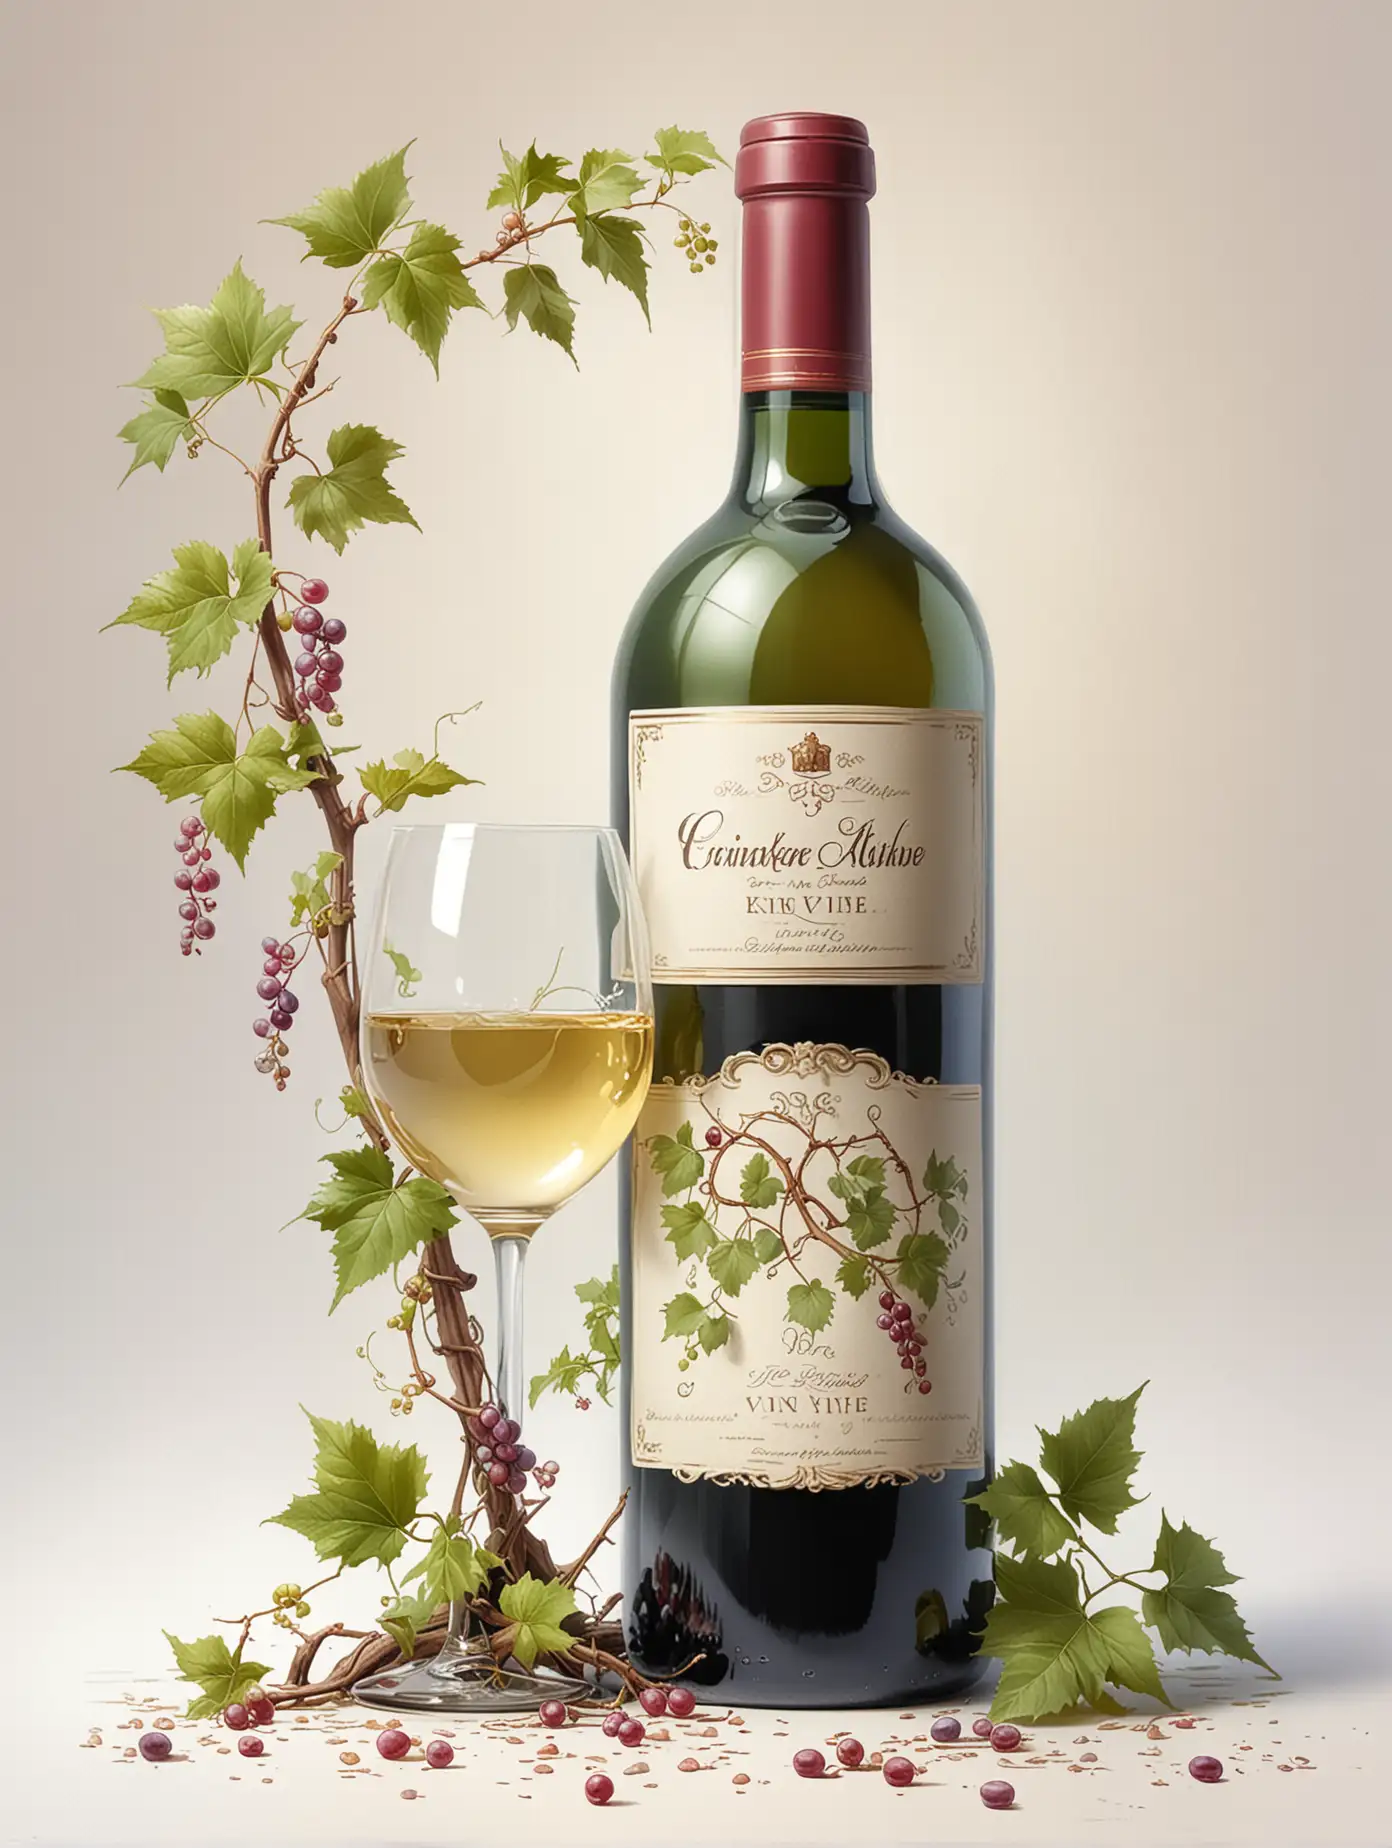 Detailed SemiRealistic Vine and Wine Bottle Illustration in Kinkade Style